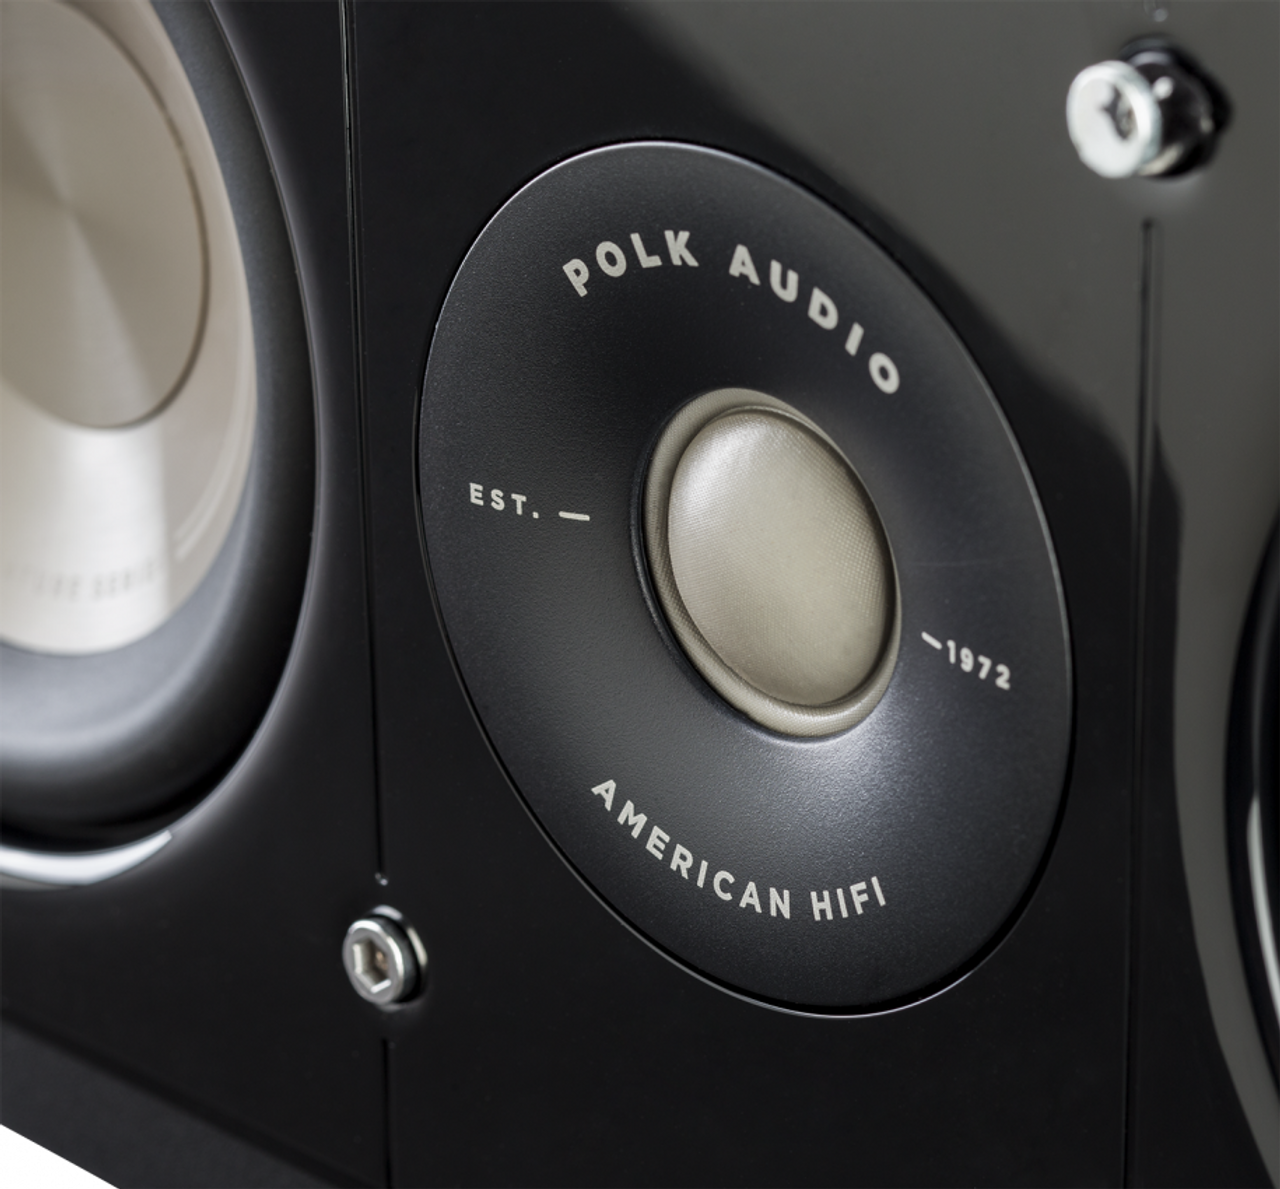 | Surround Sound Polk Audio Signature Series S30 Center Channel Speaker 2 Drivers Detachable Magnetic Grille Power Port Technology